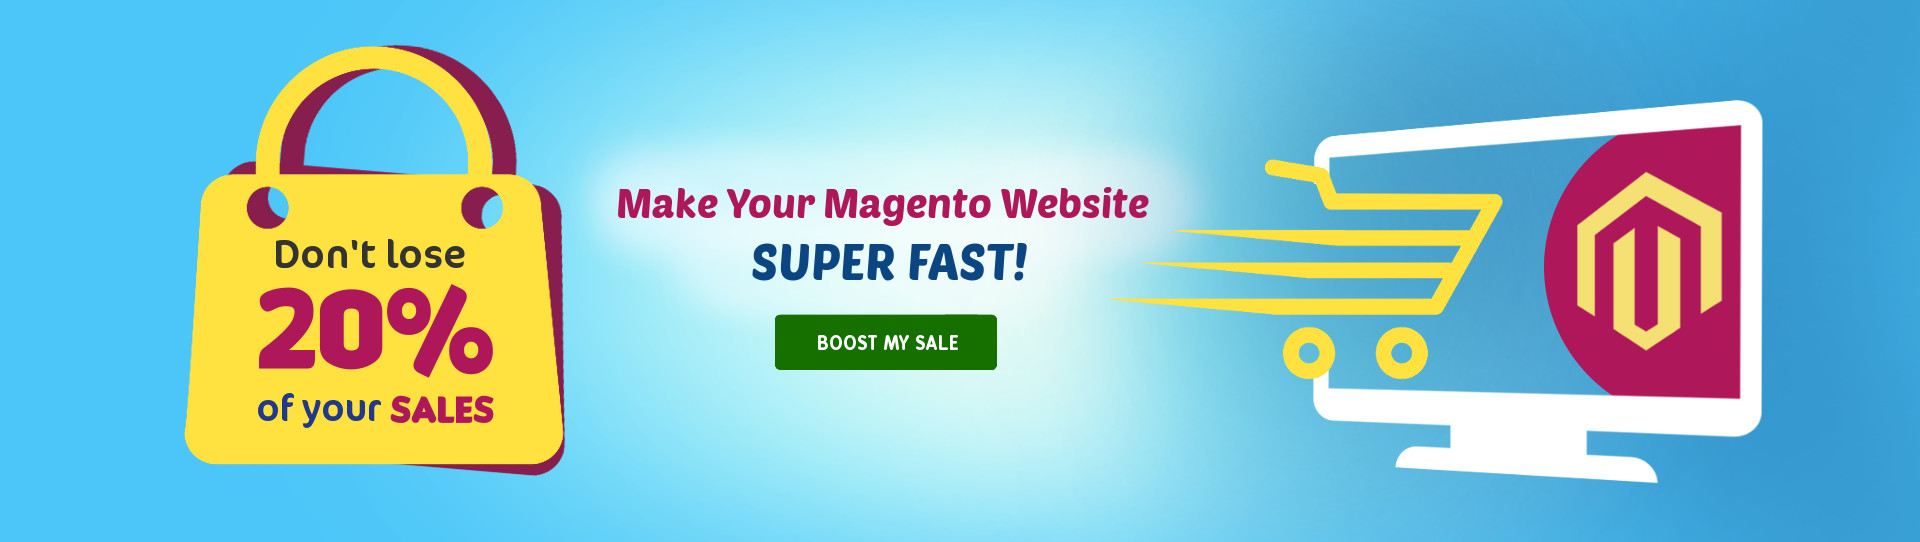 Speed optimization for Magento website